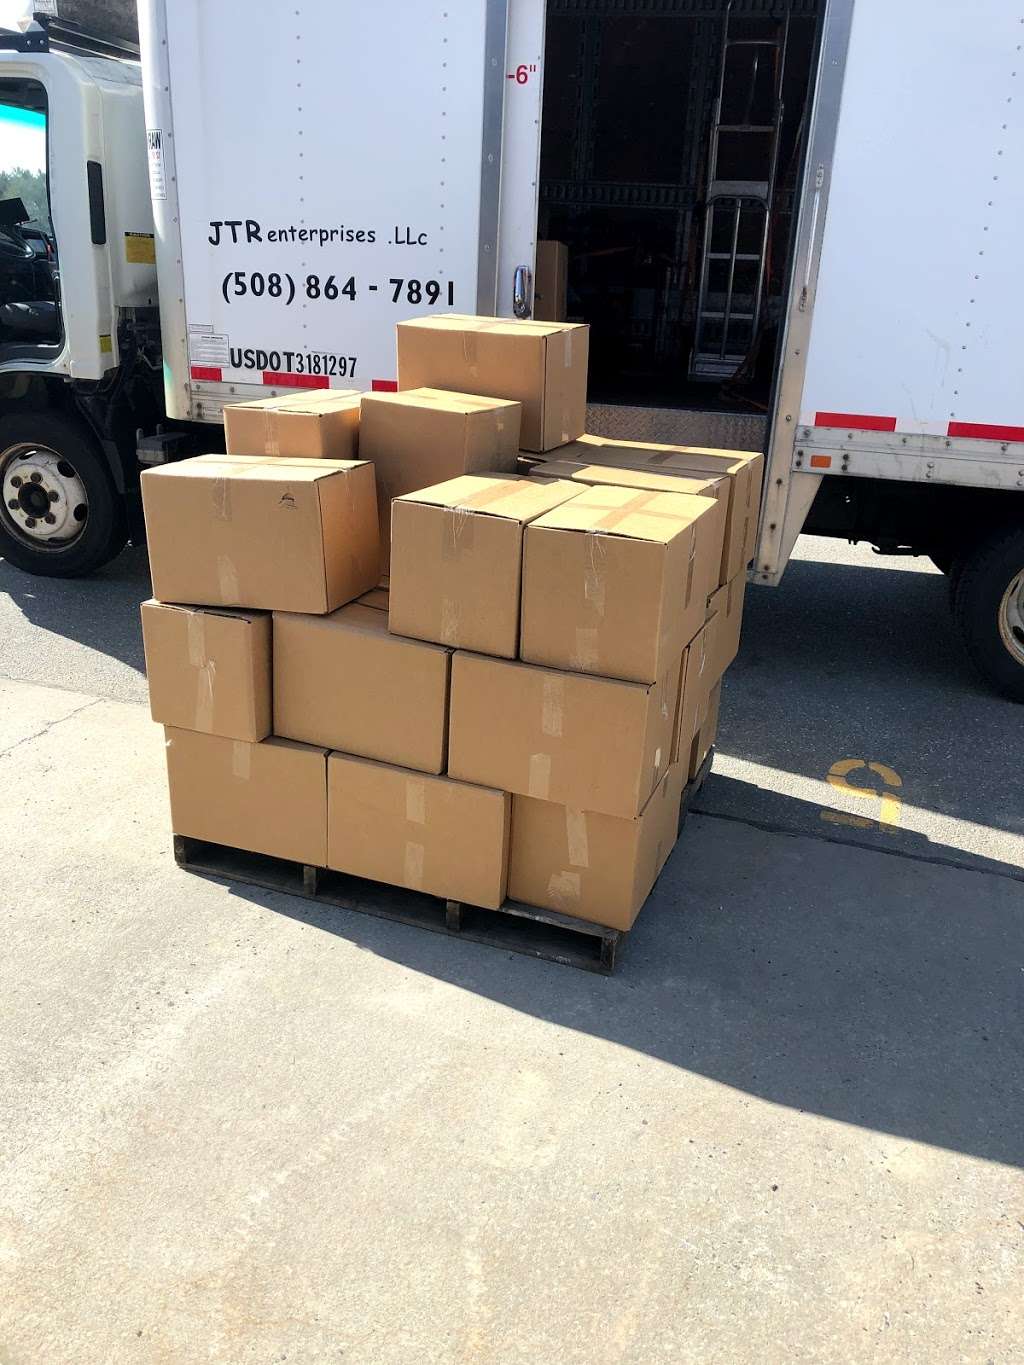 FedEx Freight | 300 Bartlett St, Marlborough, MA 01752, USA | Phone: (877) 493-7238